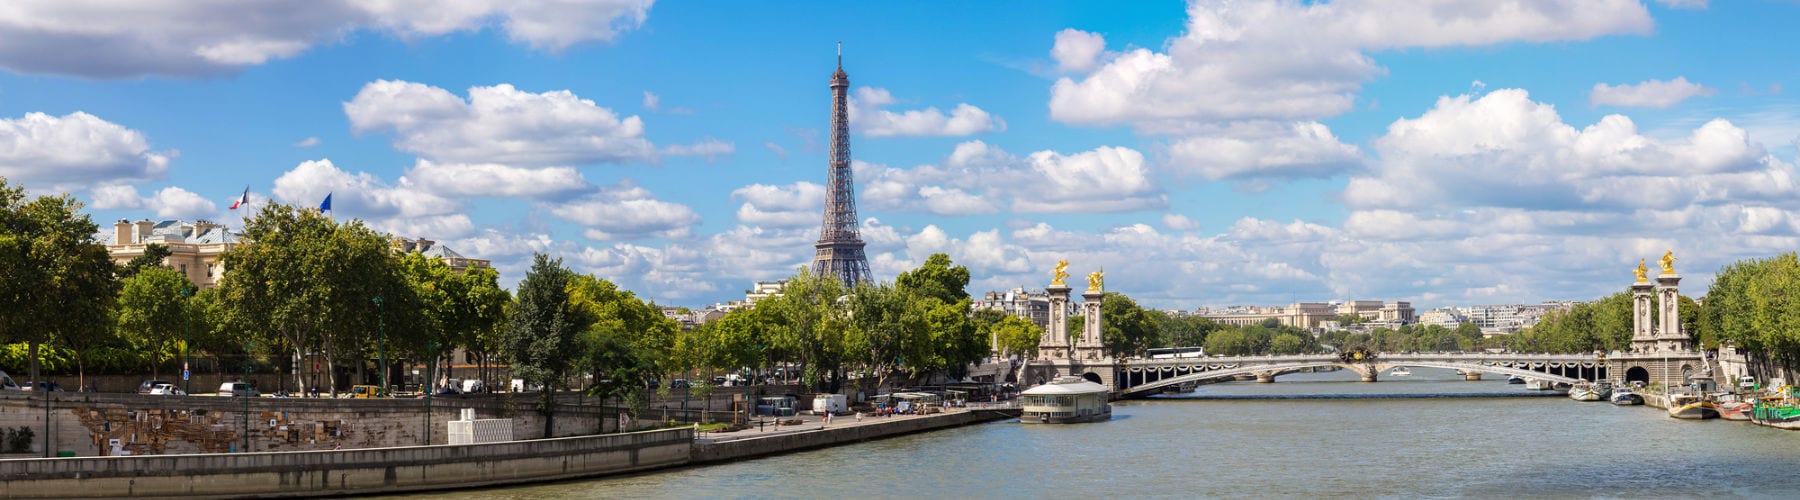 Paris Seine river and Eiffel tower